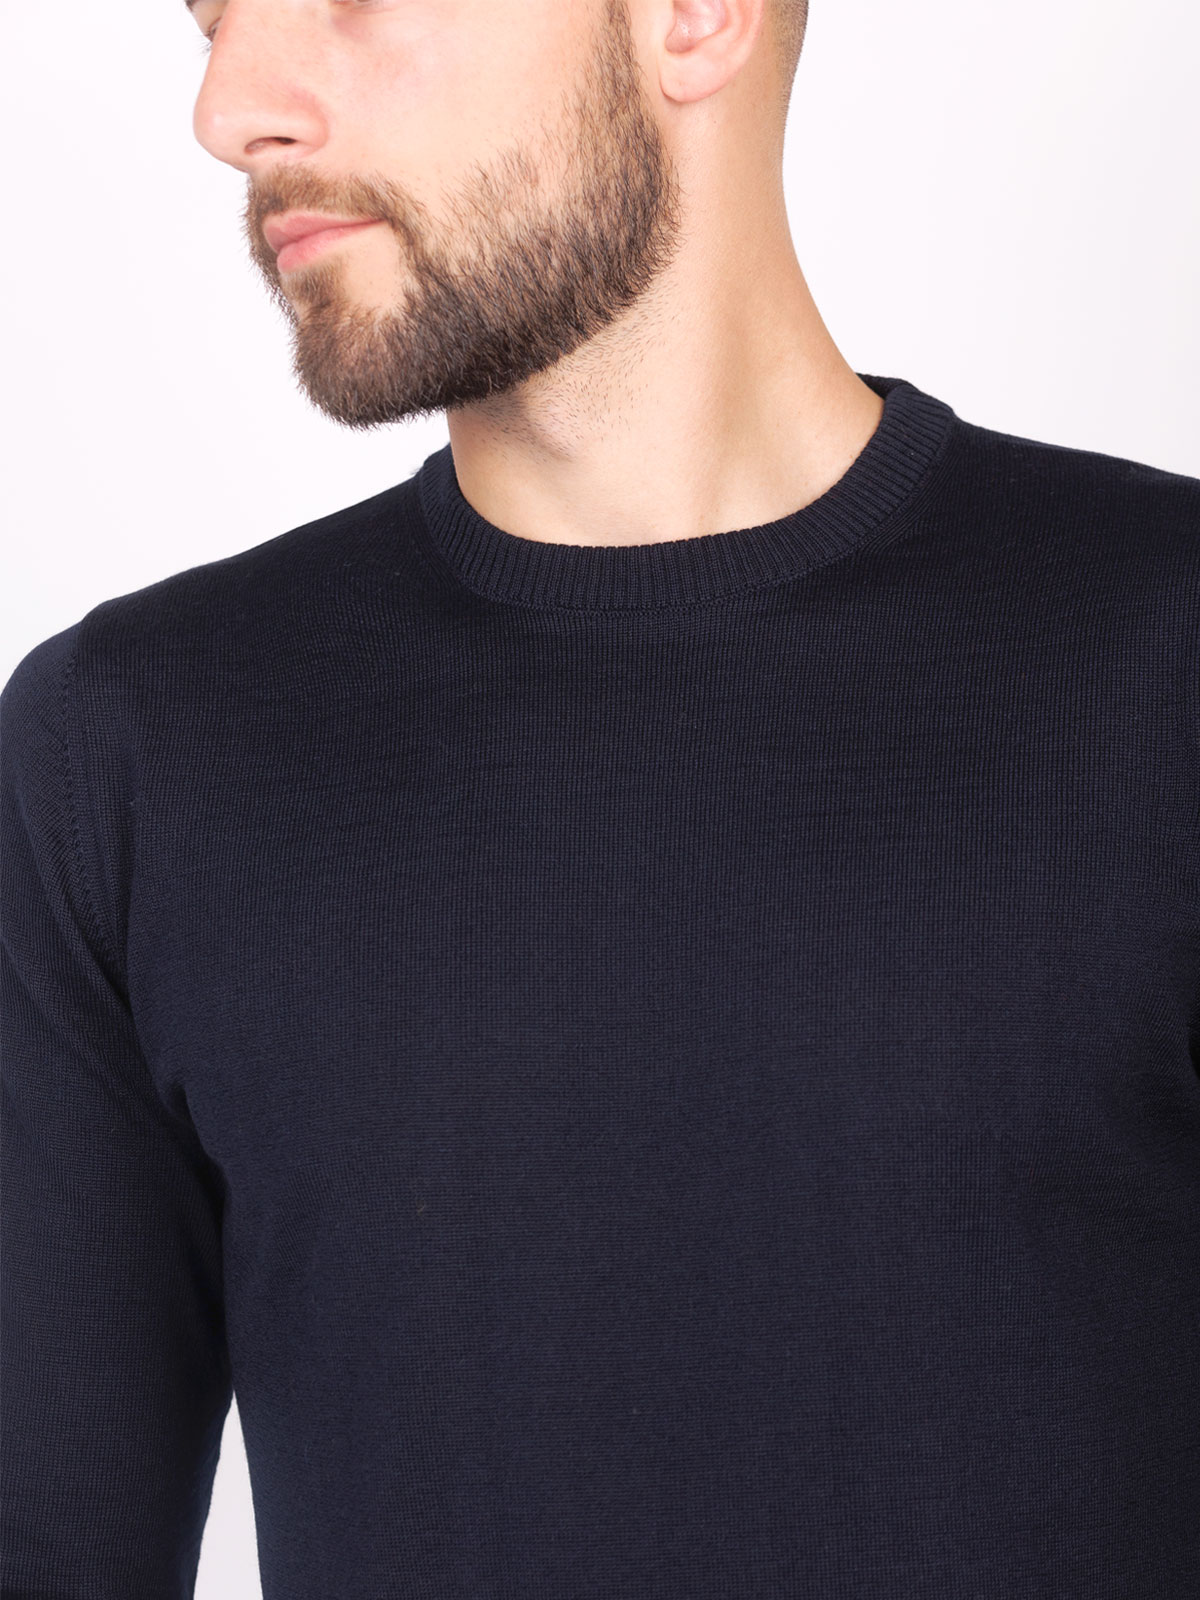 Wool sweater in dark blue - 33097 € 42.74 img3